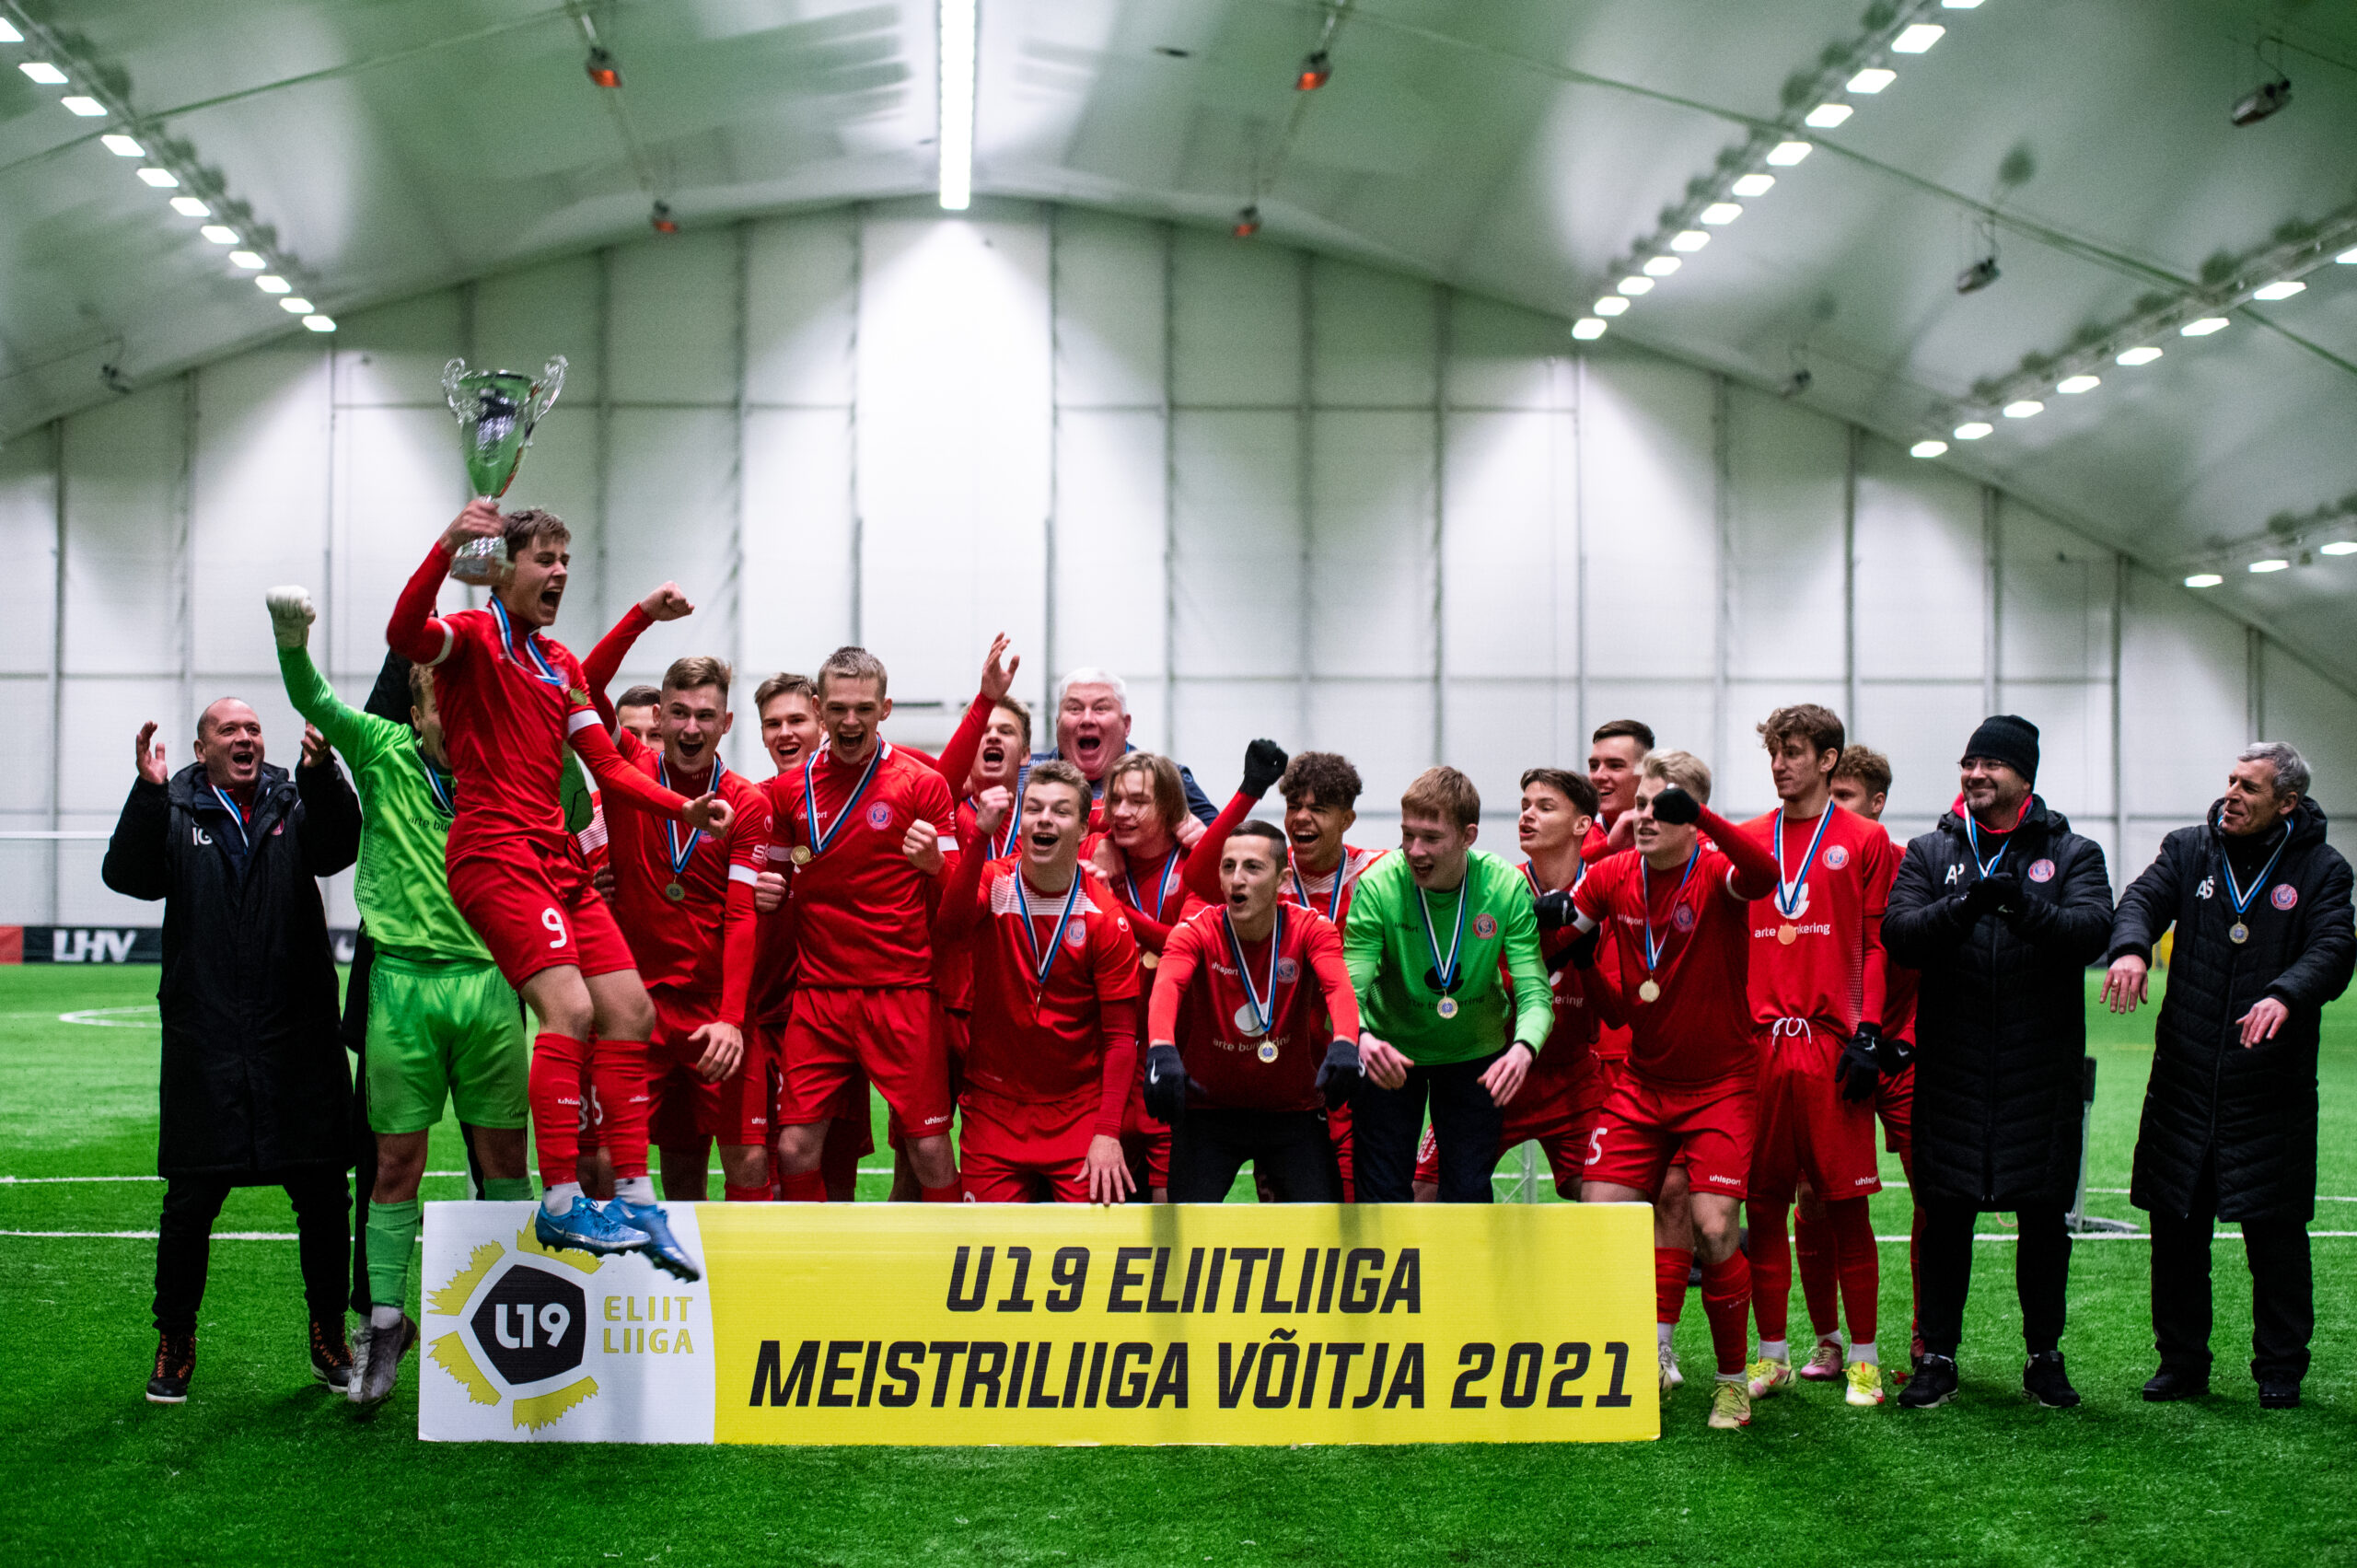 МЫ ЧЕМПИОНЫ турнира U19 Eliitliiga Meistriliiga сезона 2021